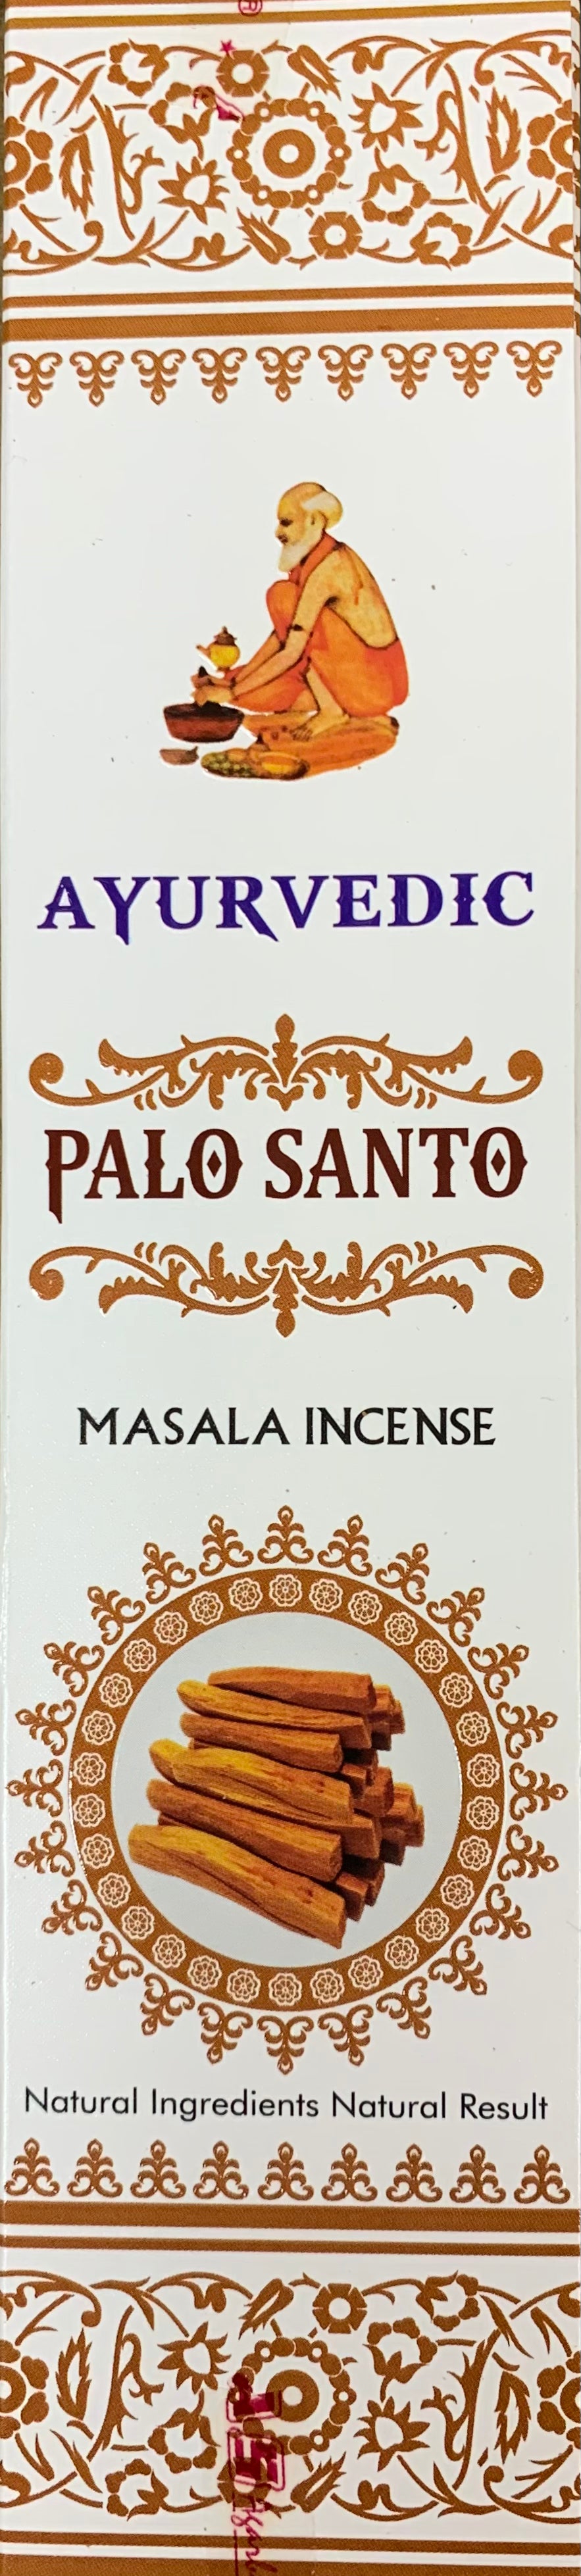 Incense Ayurvedic/Palo Santo